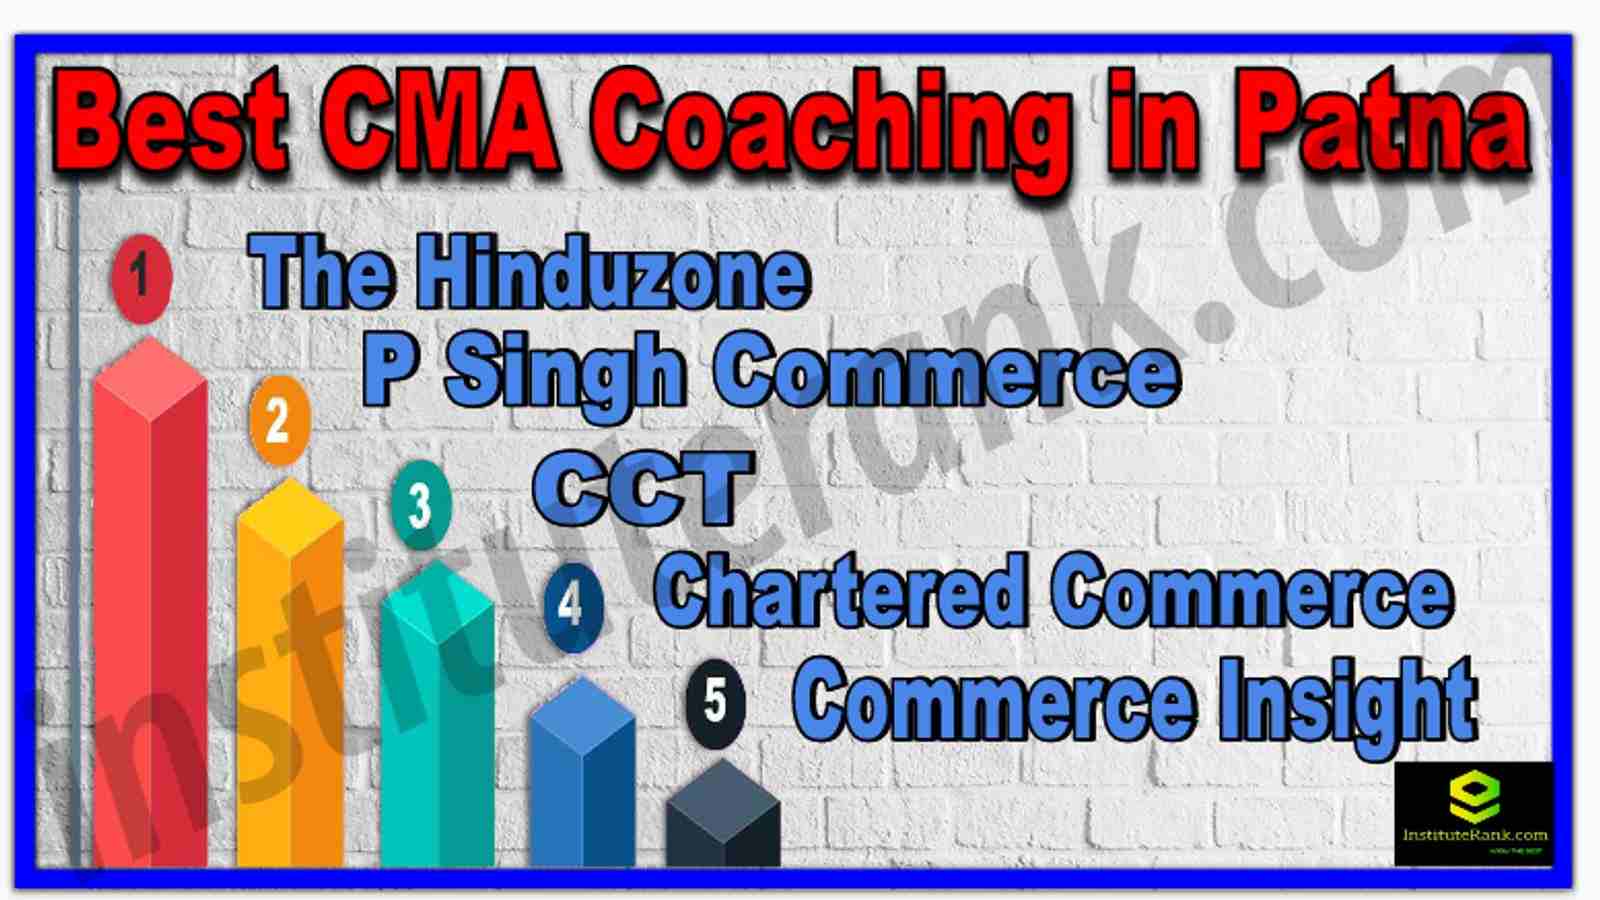 Best CMA Coaching in Patna